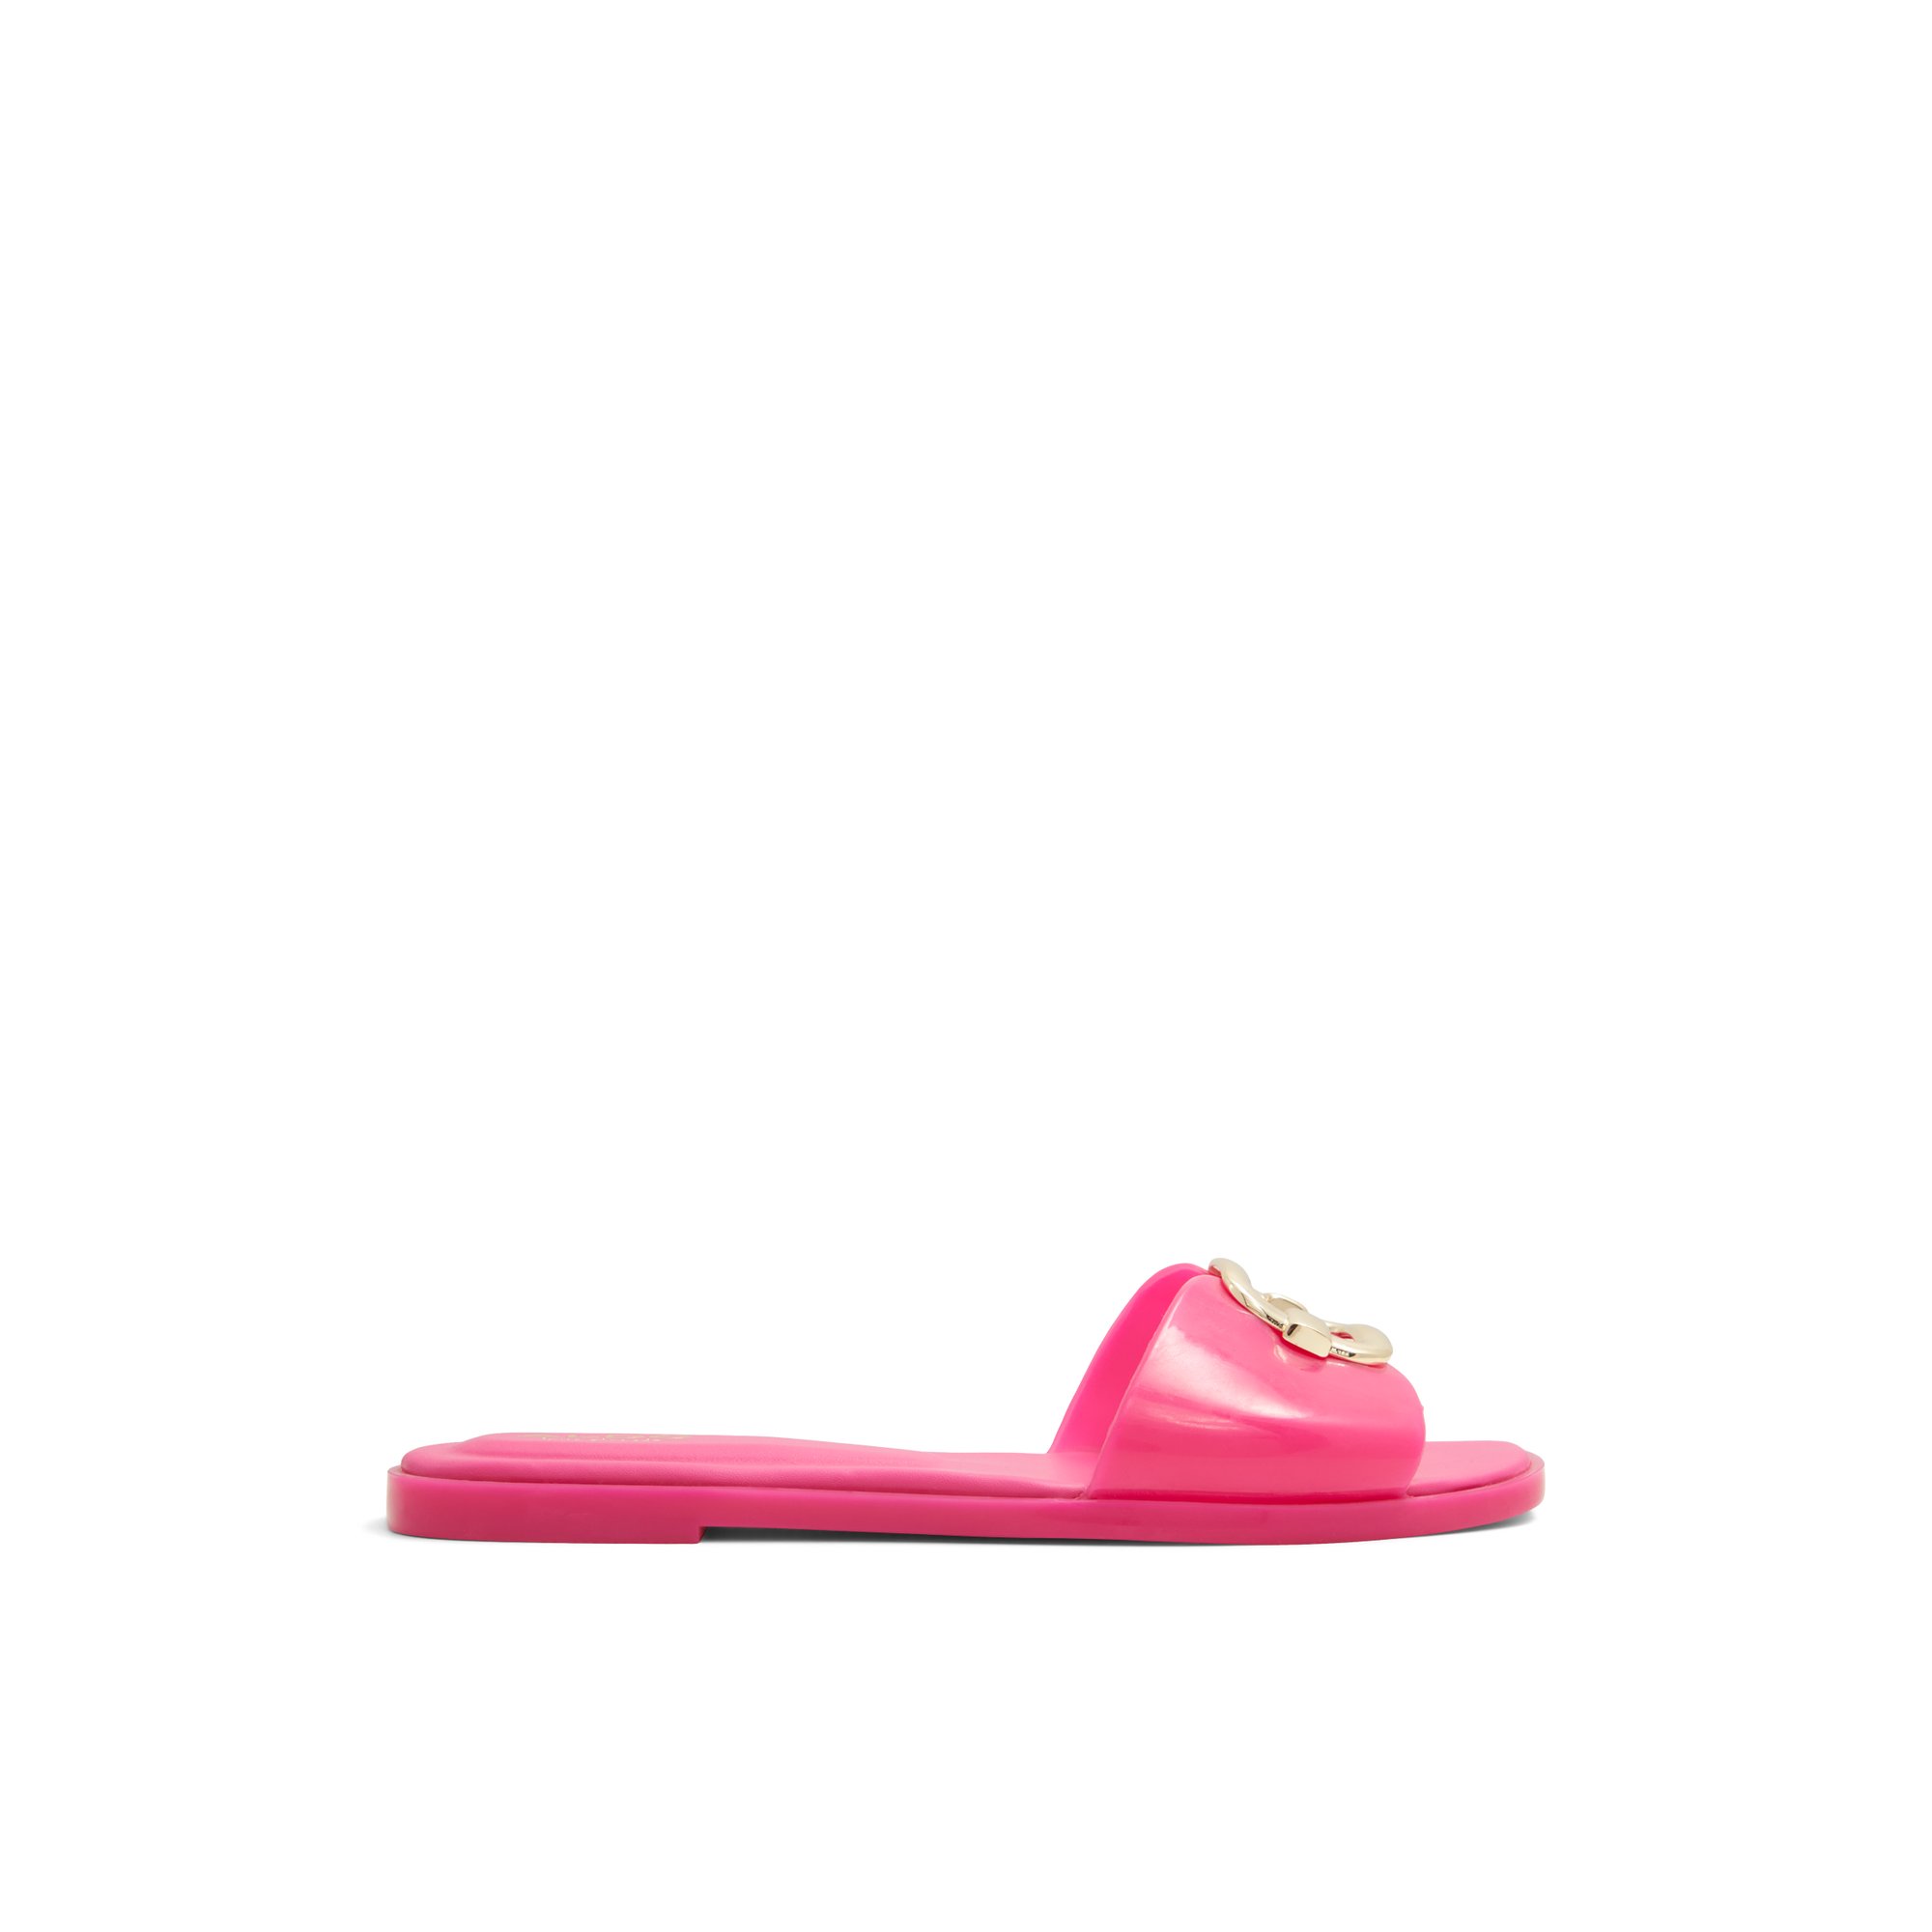 ALDO Jellyicious - Women's Flat Sandals - Pink